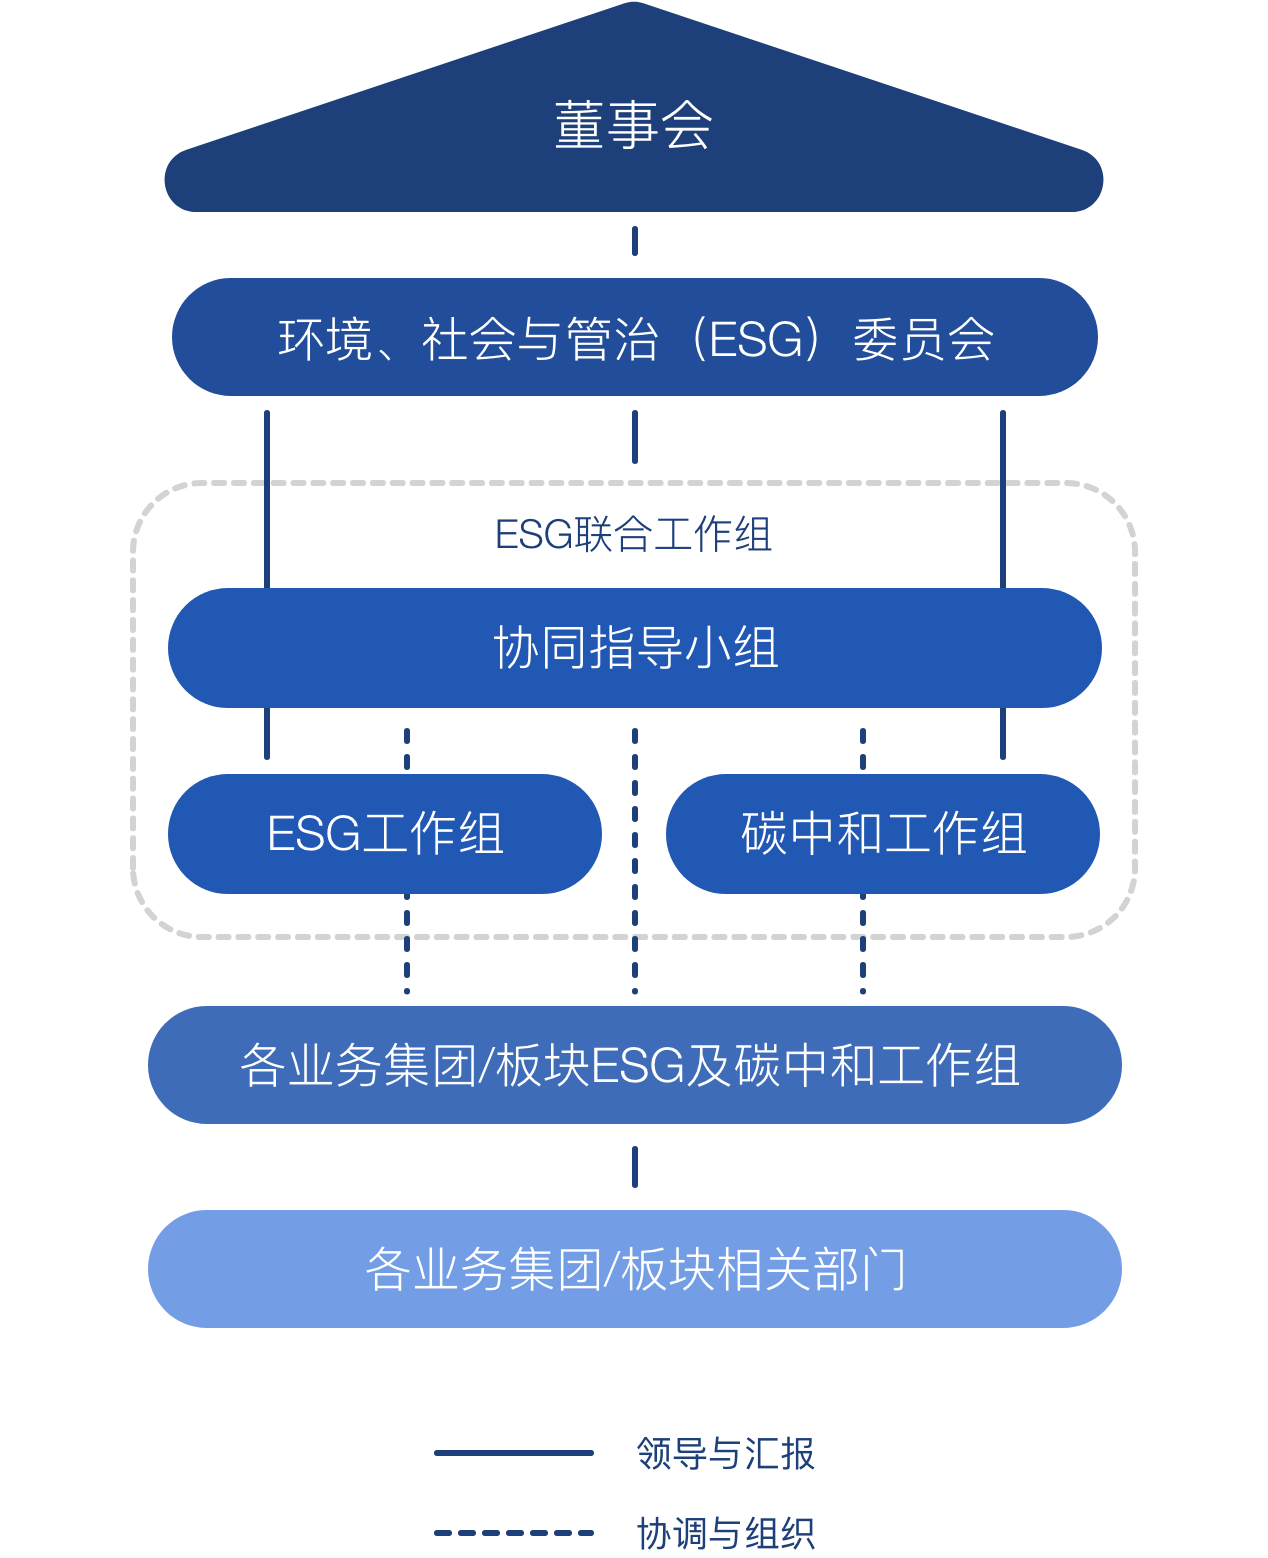 我们的承诺– Zhejiang Geely Holding Group image